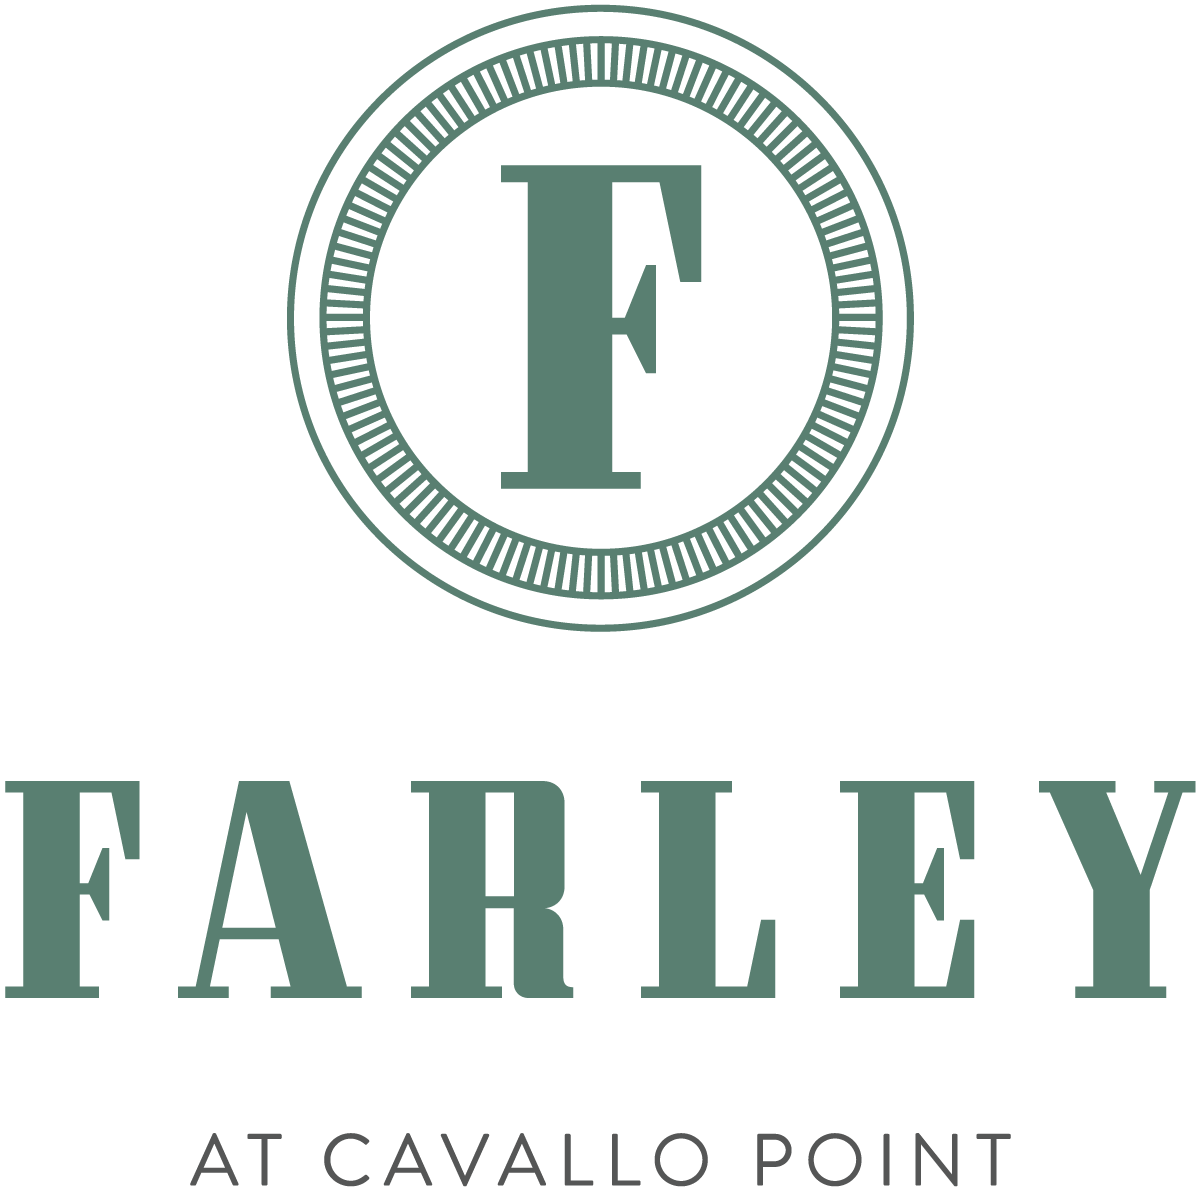 Farley at Cavallo Point logo